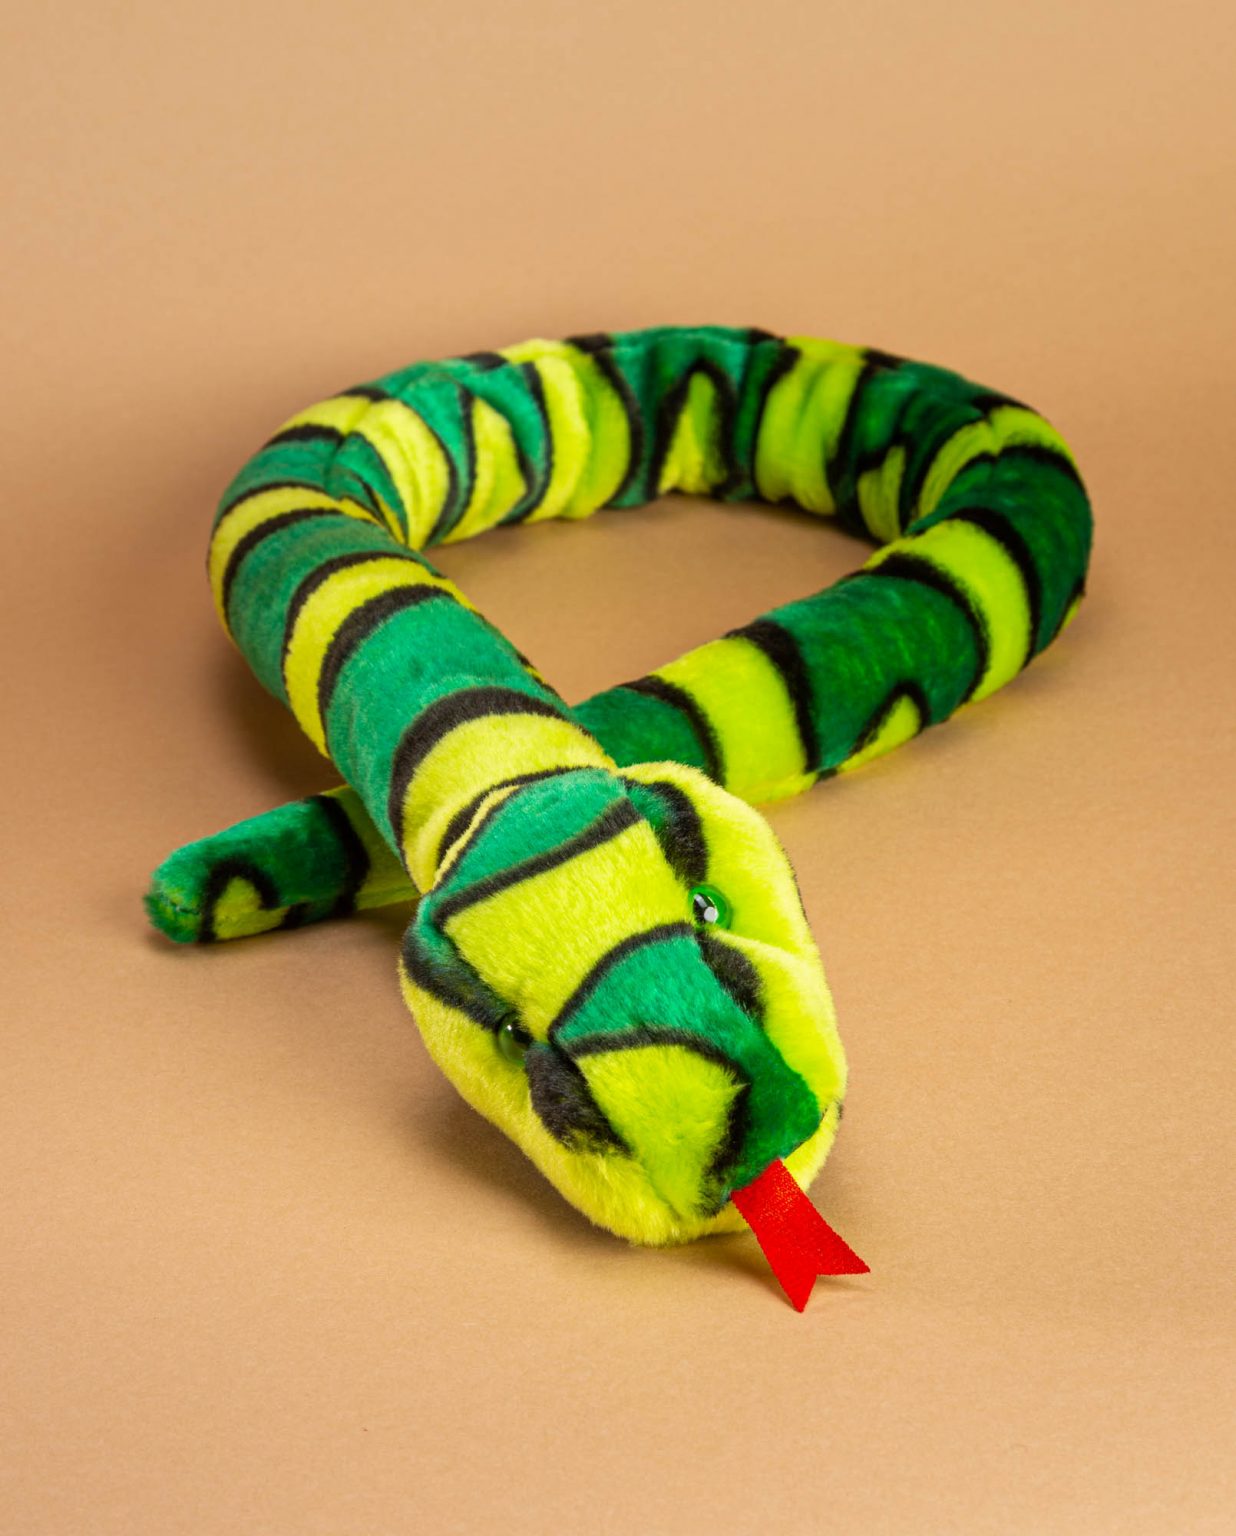 Slinky Camouflage Snake gift